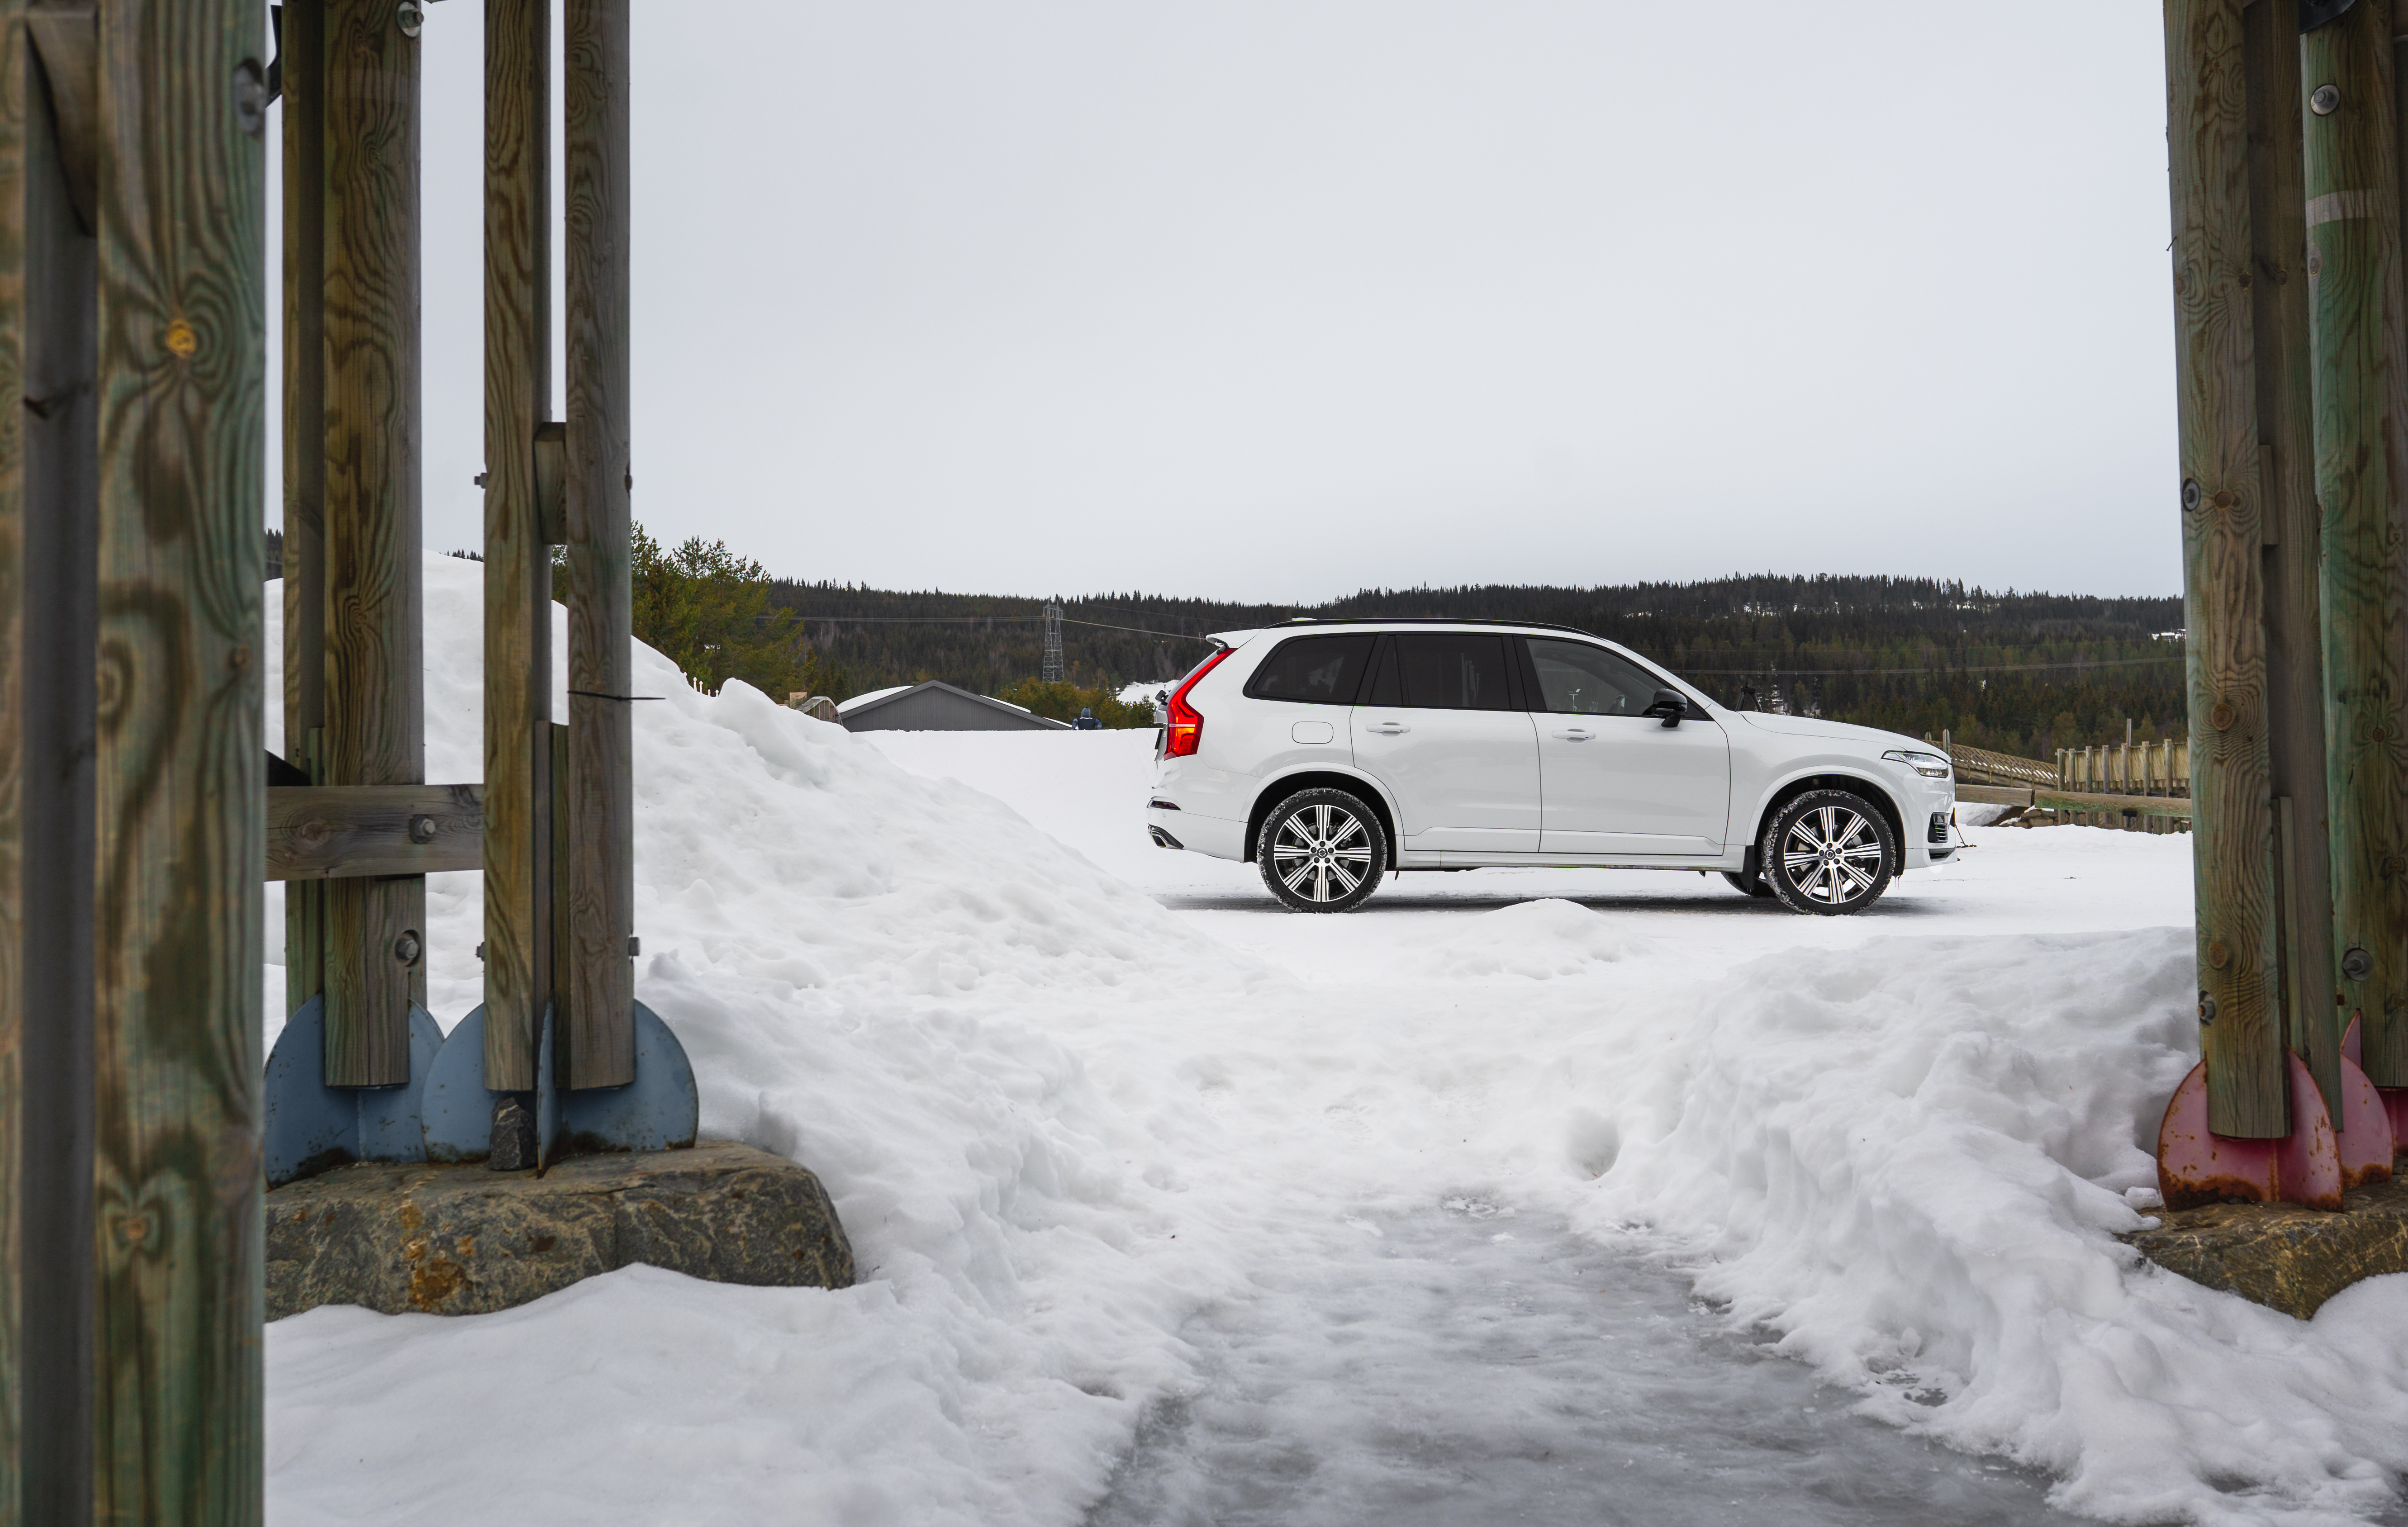 General 5323x3376 car Volvo SUV Volvo XC90 snow winter vehicle Swedish cars white cars